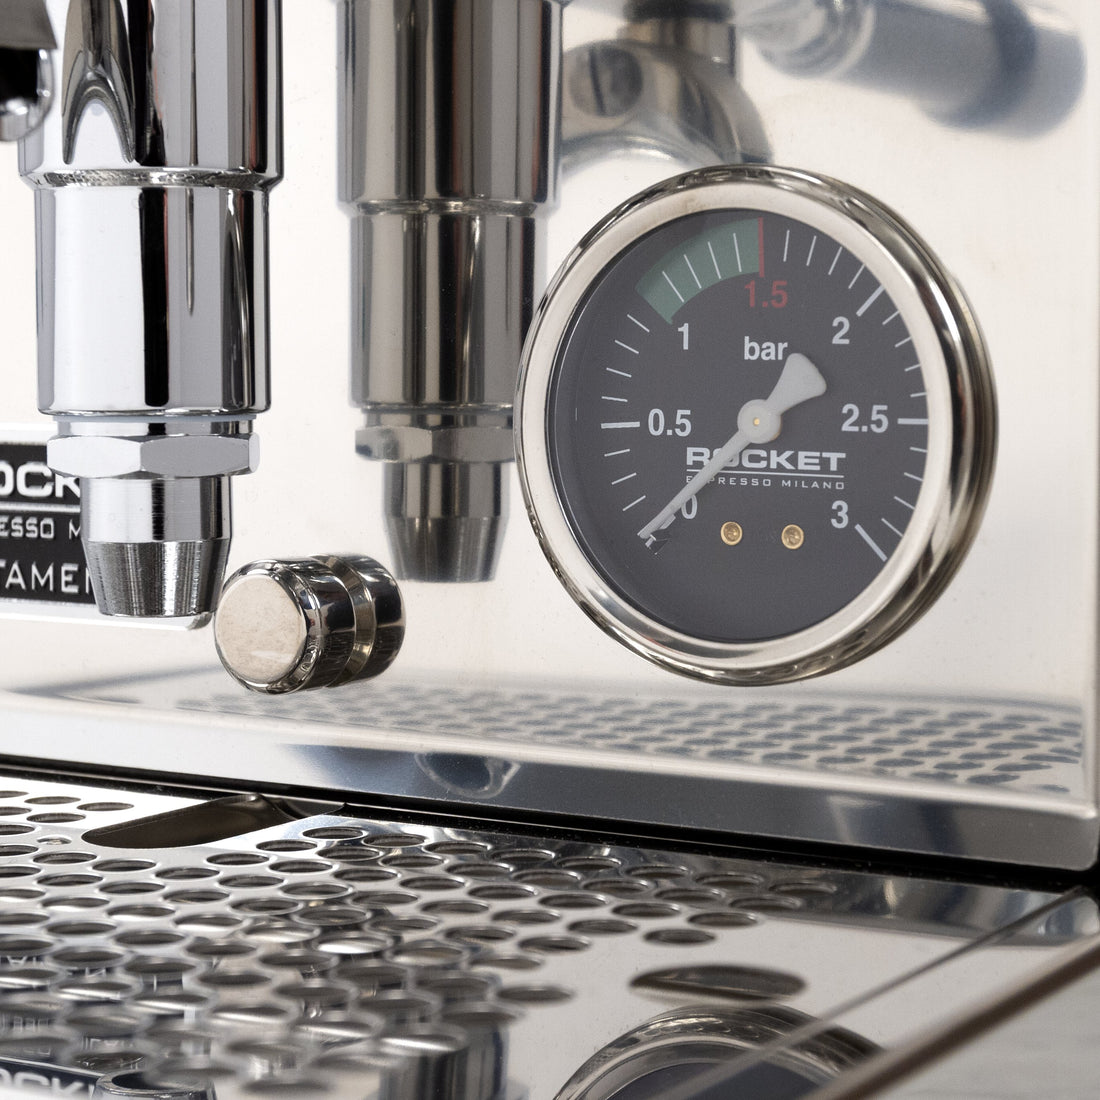 Rocket Espresso Appartamento Espresso Machine - Maple Birdseye